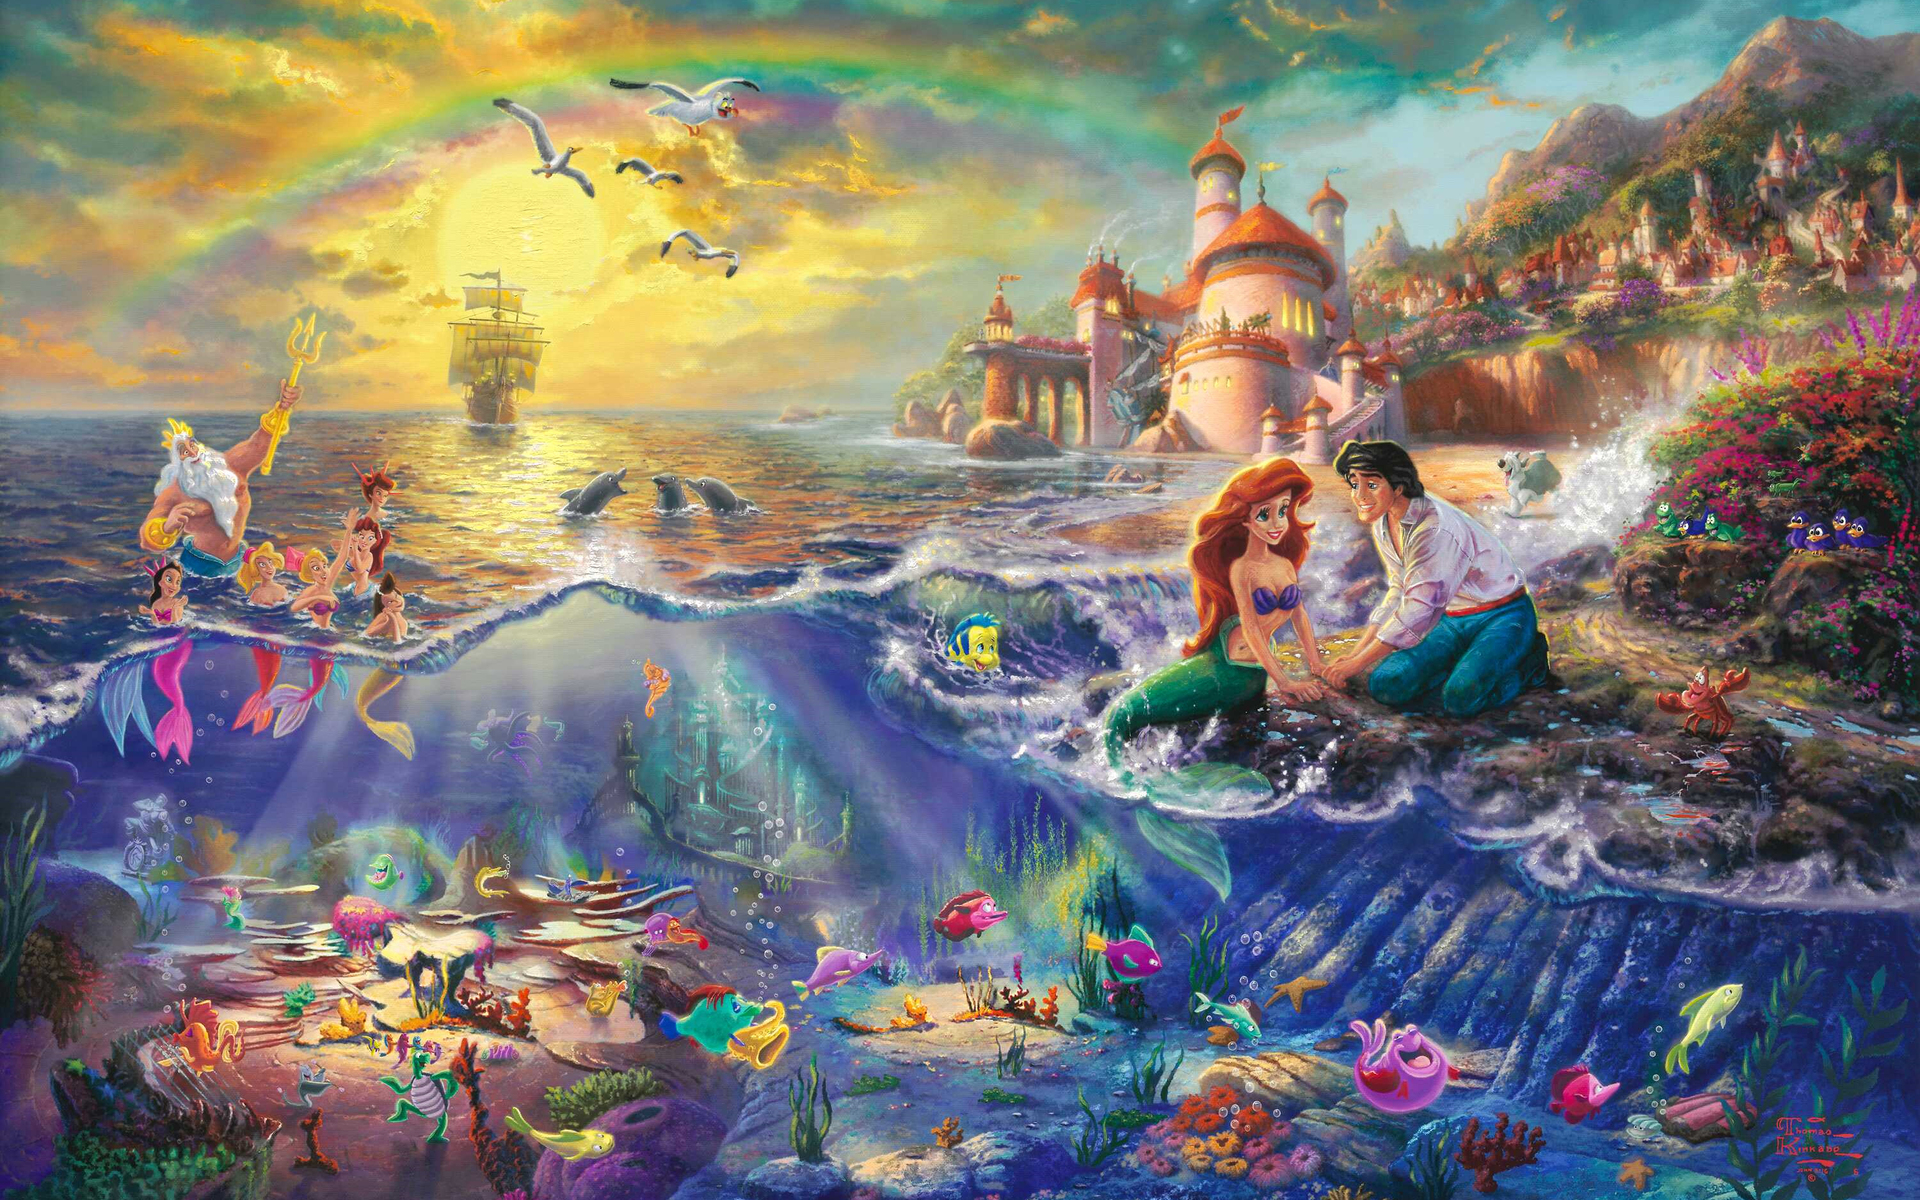 The Little Mermaid Puter Wallpaper Desktop Background